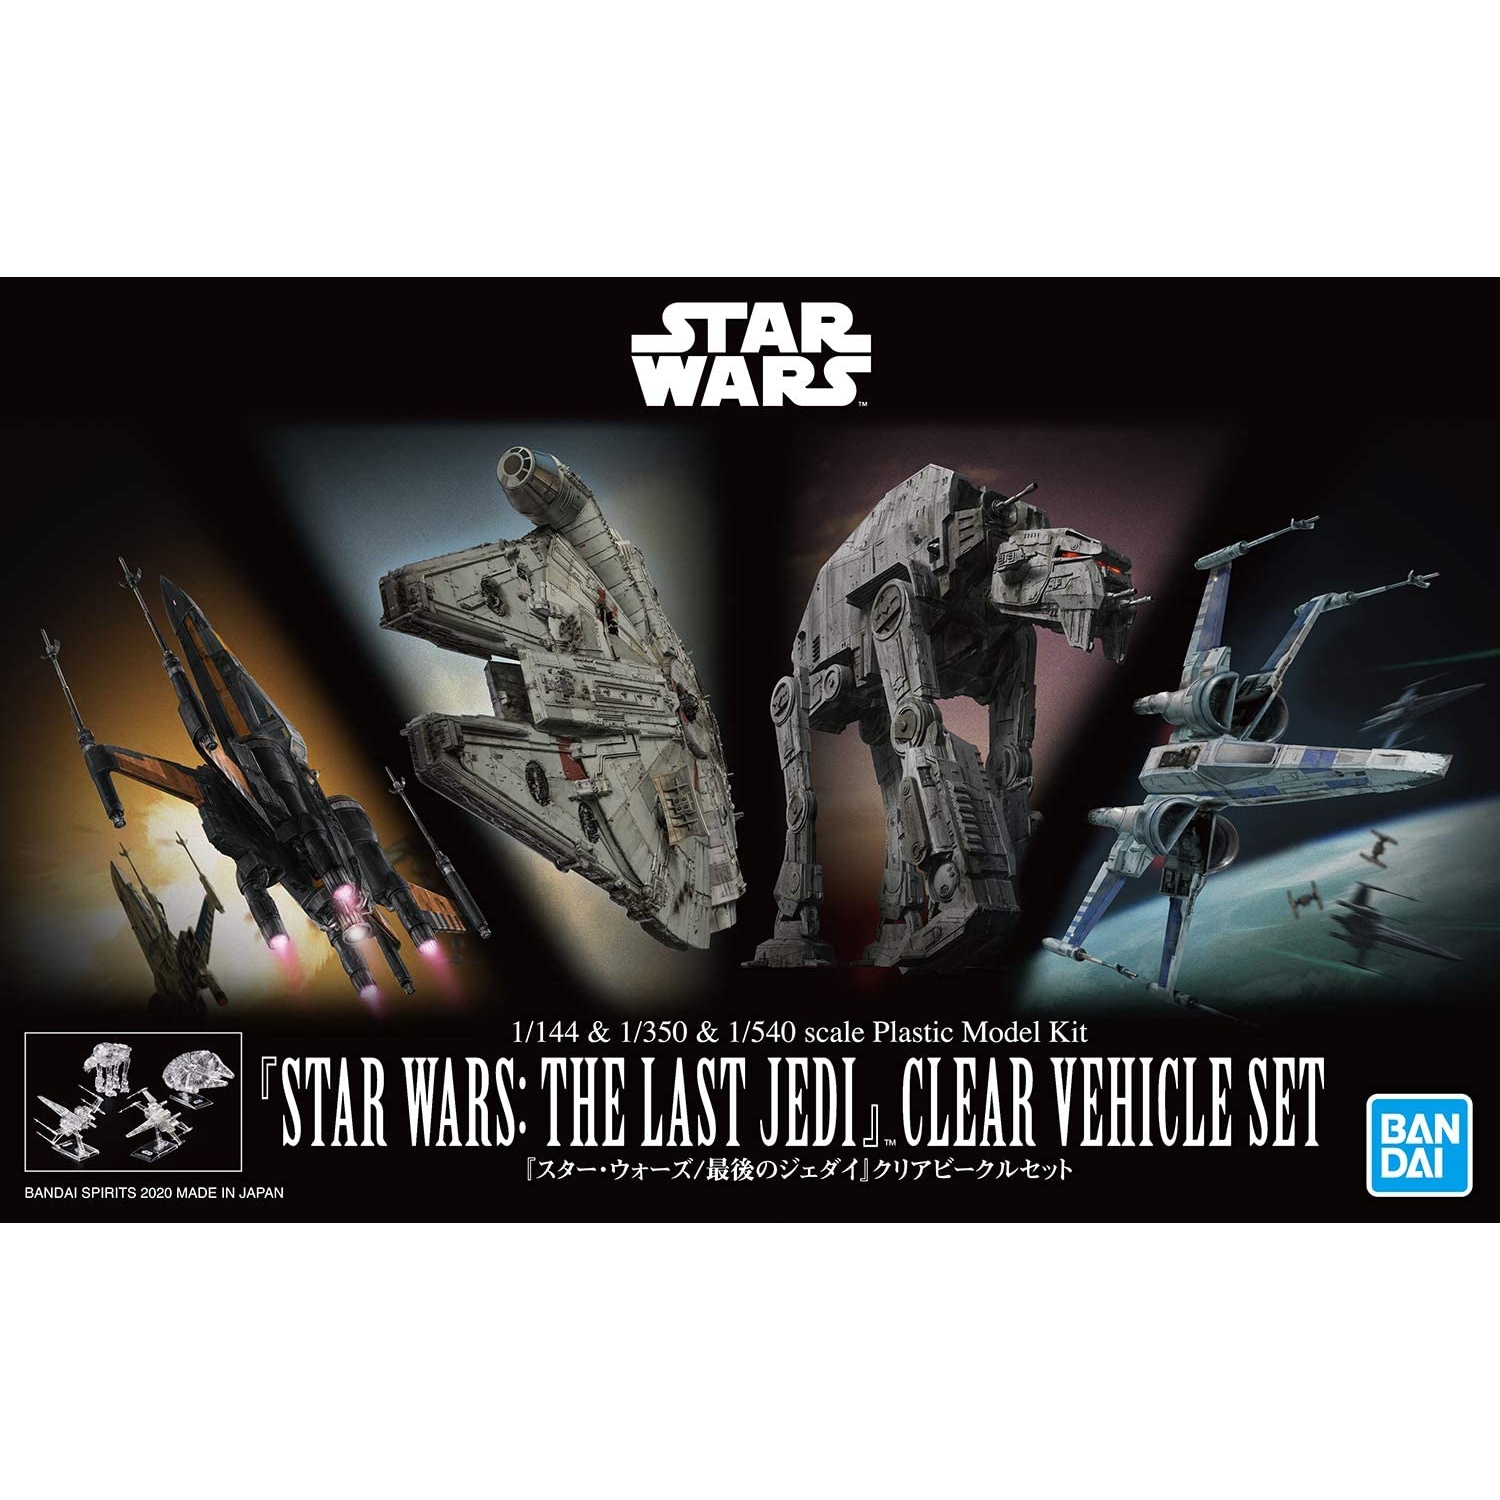 Bandai 1/144 & 1/350 & 1/540 Star Wars: The Last Jedi Clear Vehicle Set "Star Wars", Bandai Spirits